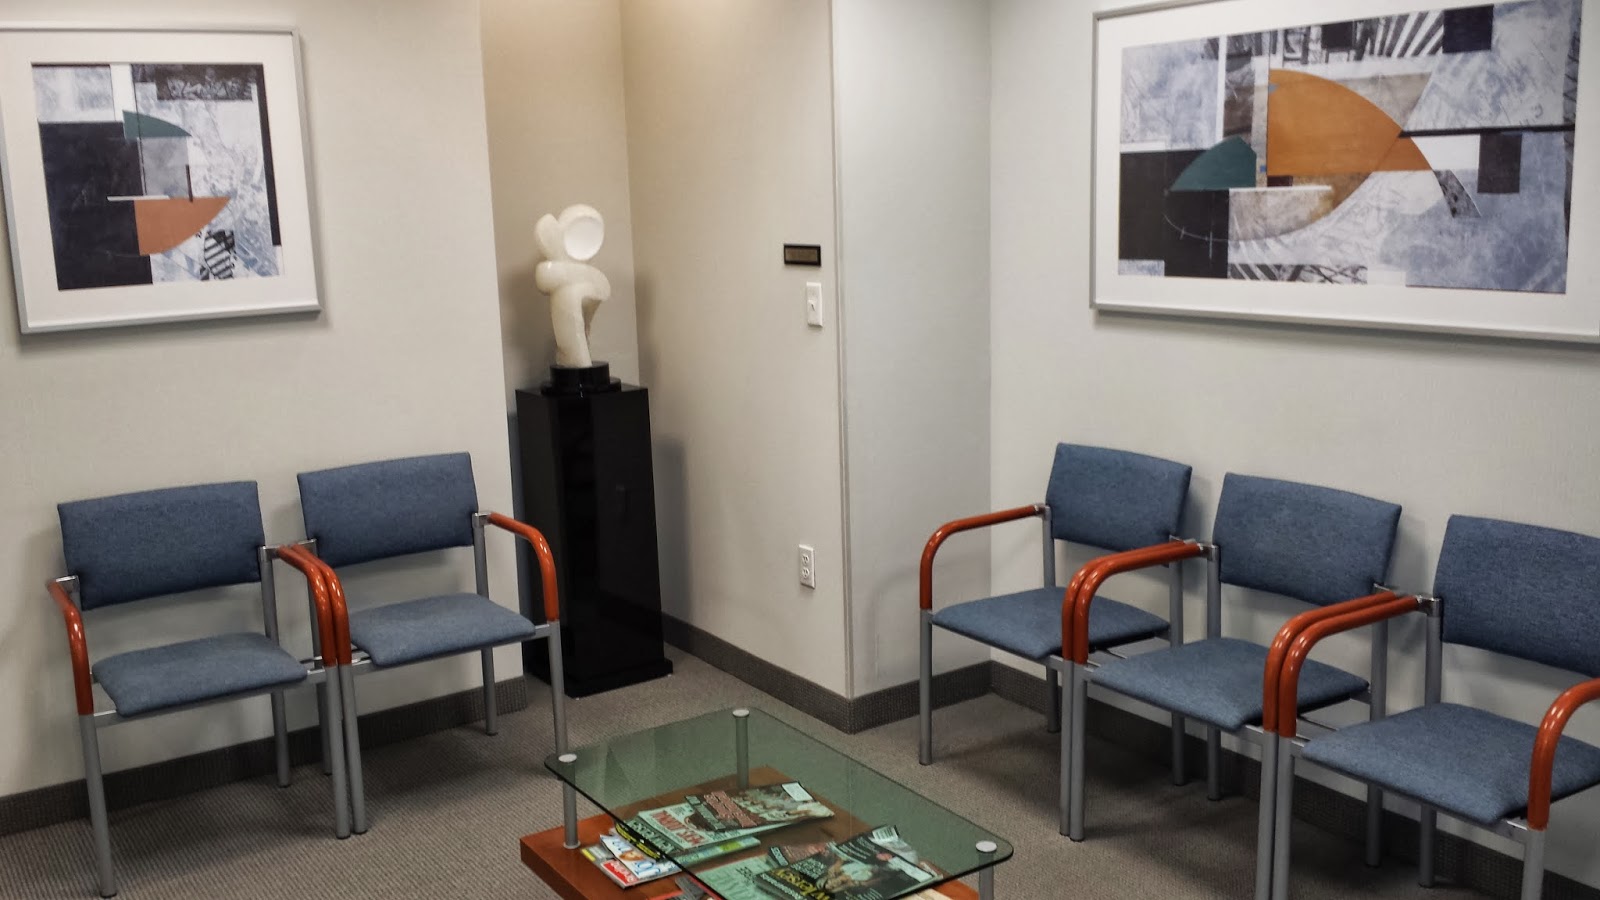 Photo of Dental Office of Paul R. Feldman, DMD in West Orange City, New Jersey, United States - 3 Picture of Point of interest, Establishment, Health, Dentist